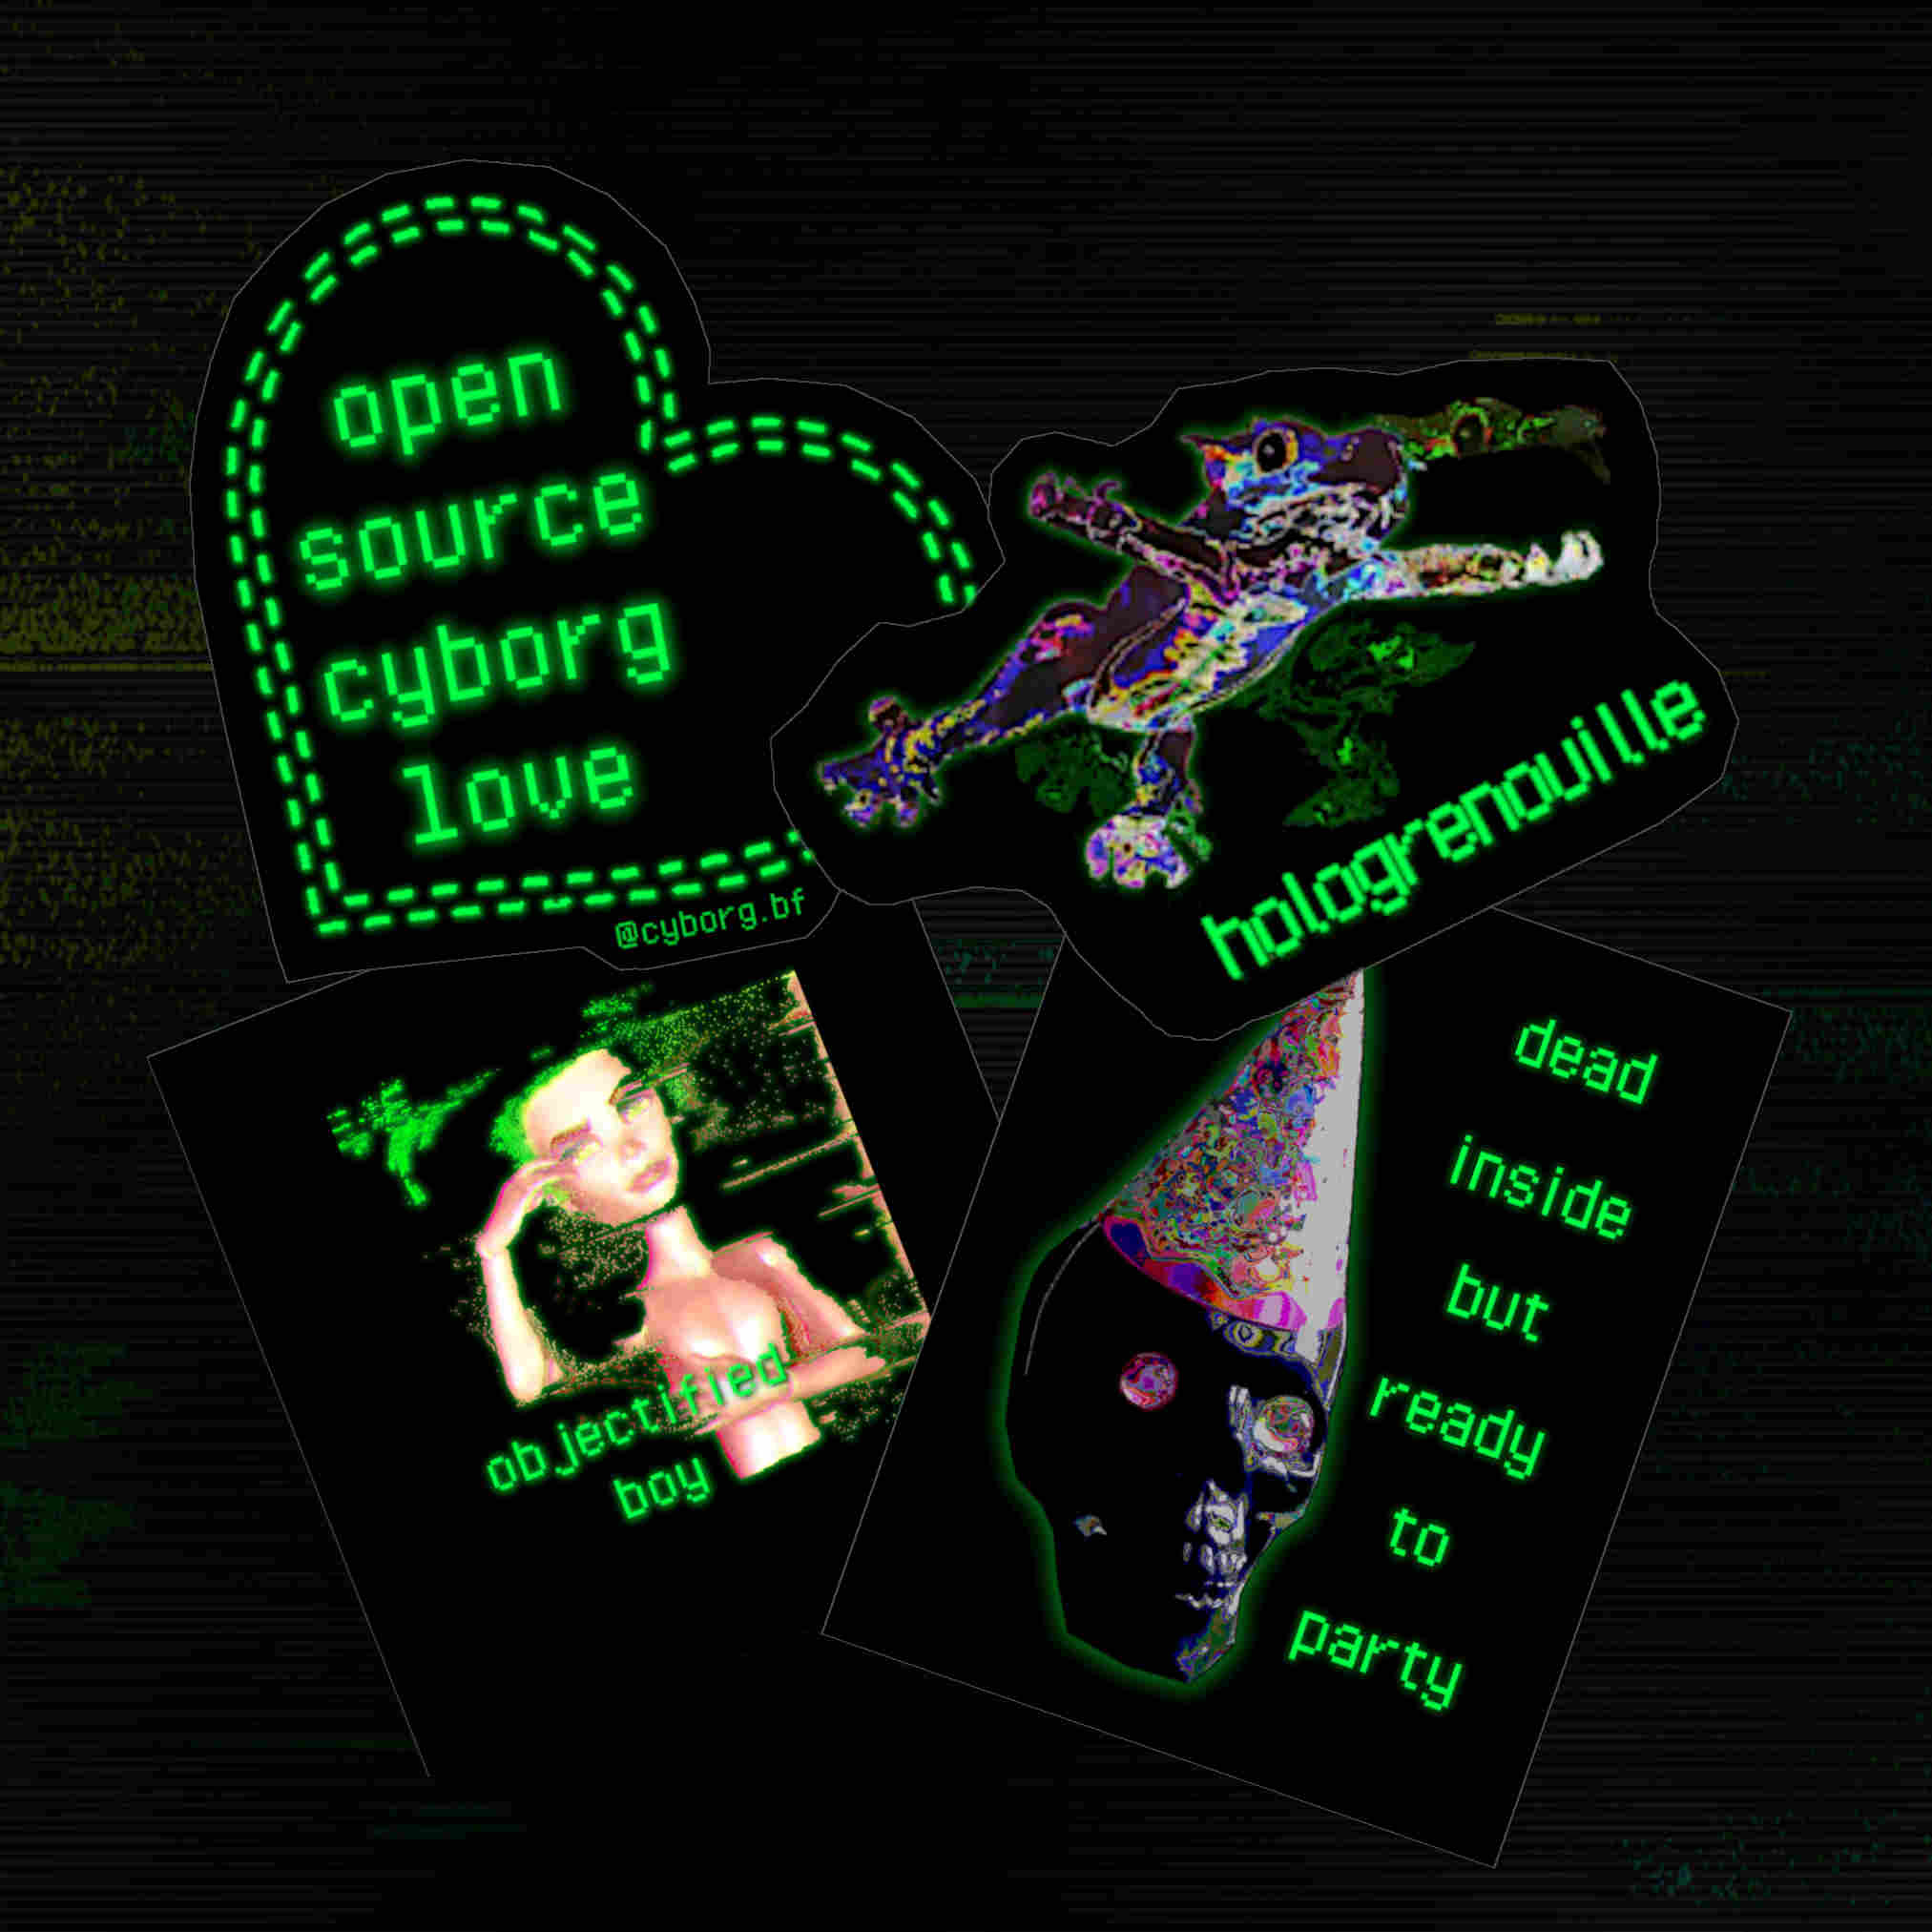 stickers shown above called Open Source Cyborg Love, Hologrenouille, Objectified Boy, Dead Inside